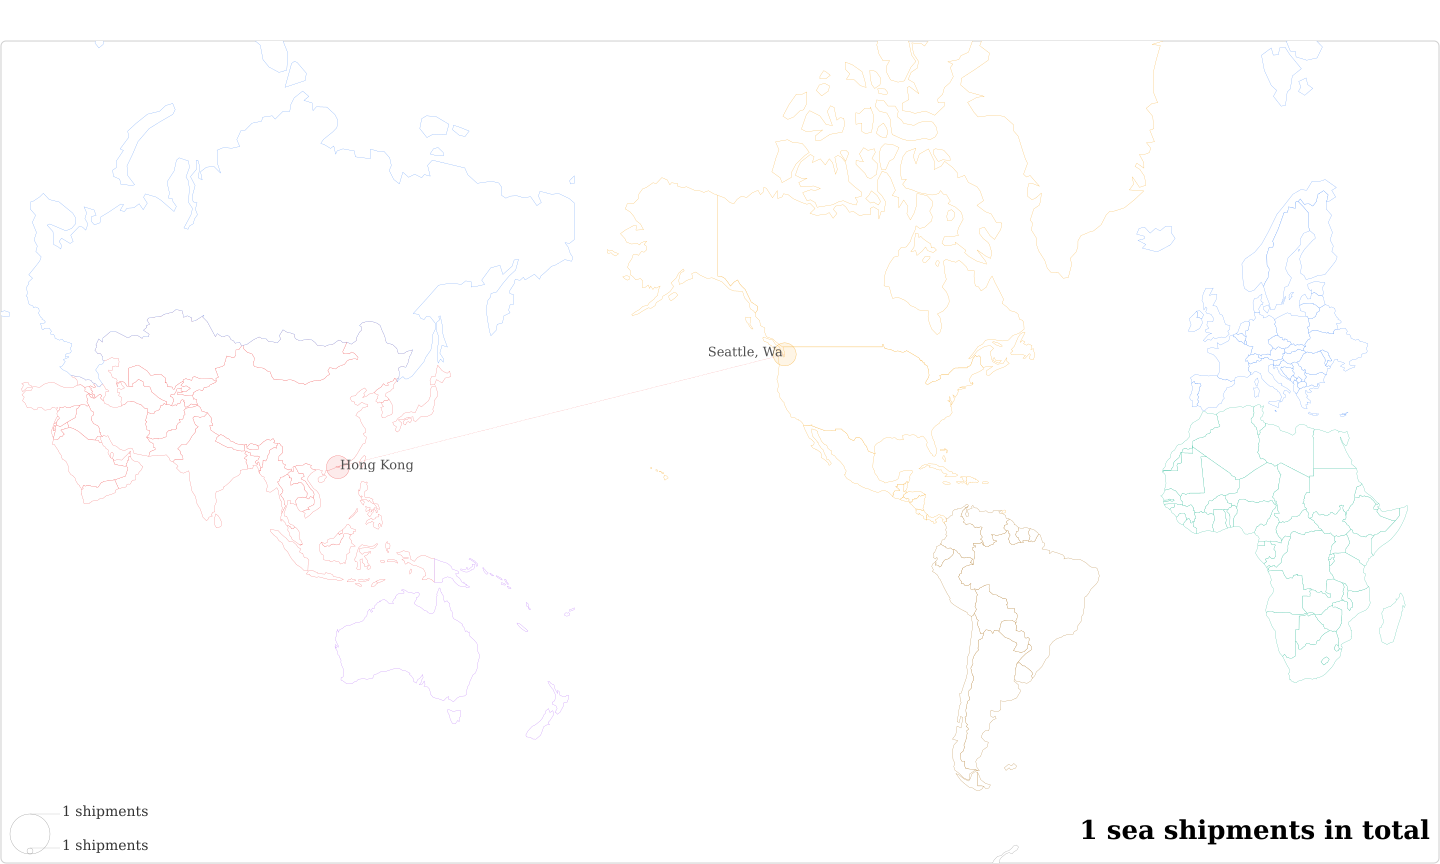 Le Globe Trotter Artisans Du Monde's Imports Per Country Map